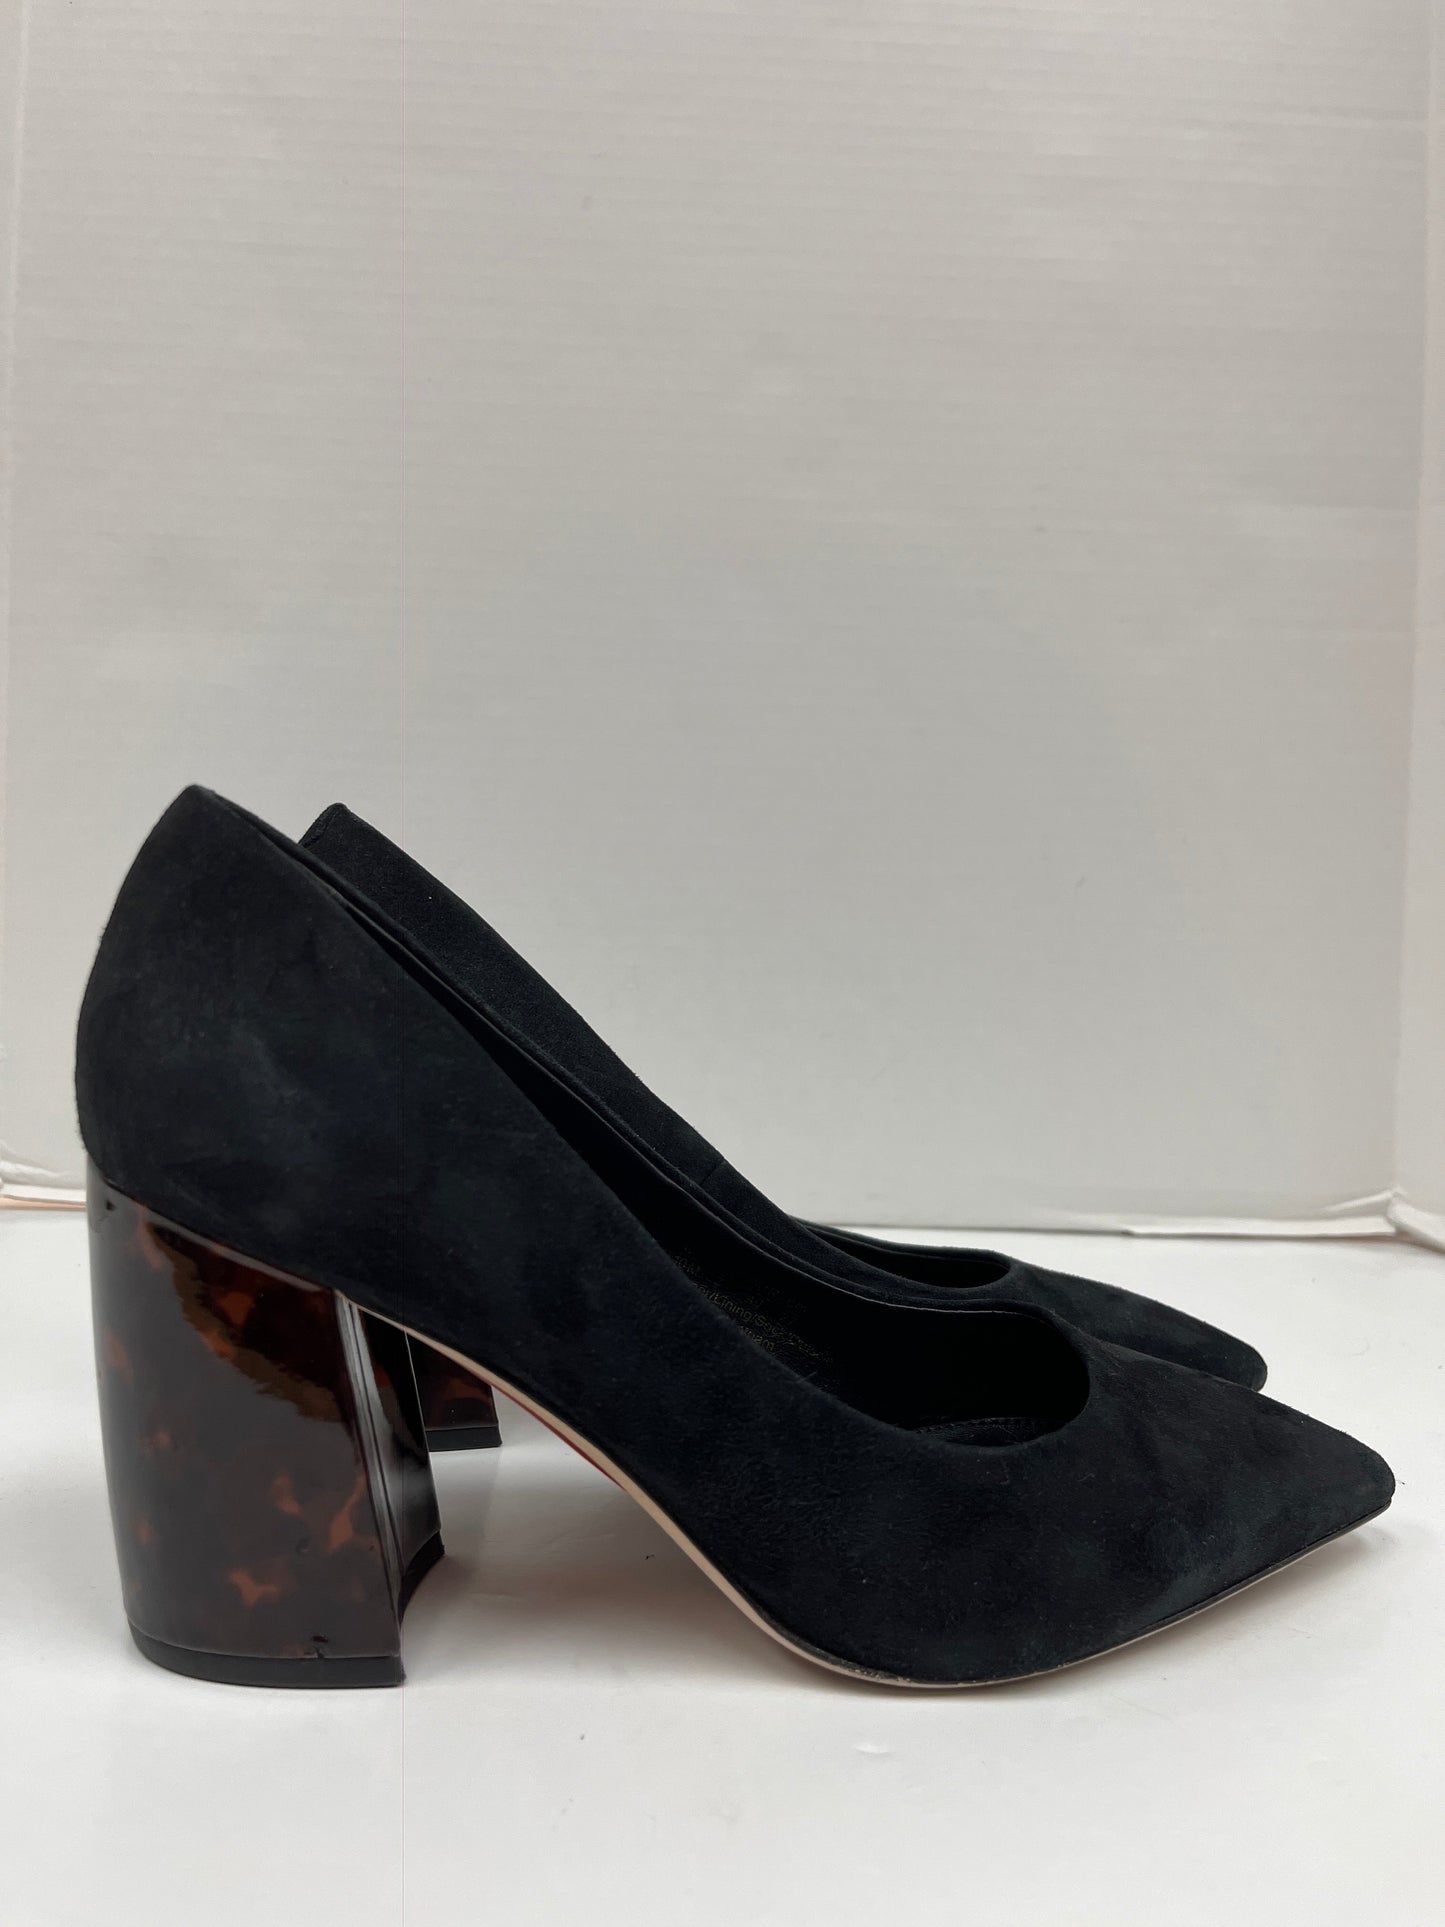 Shoes Heels Block By J Mclaughlin  Size: 10